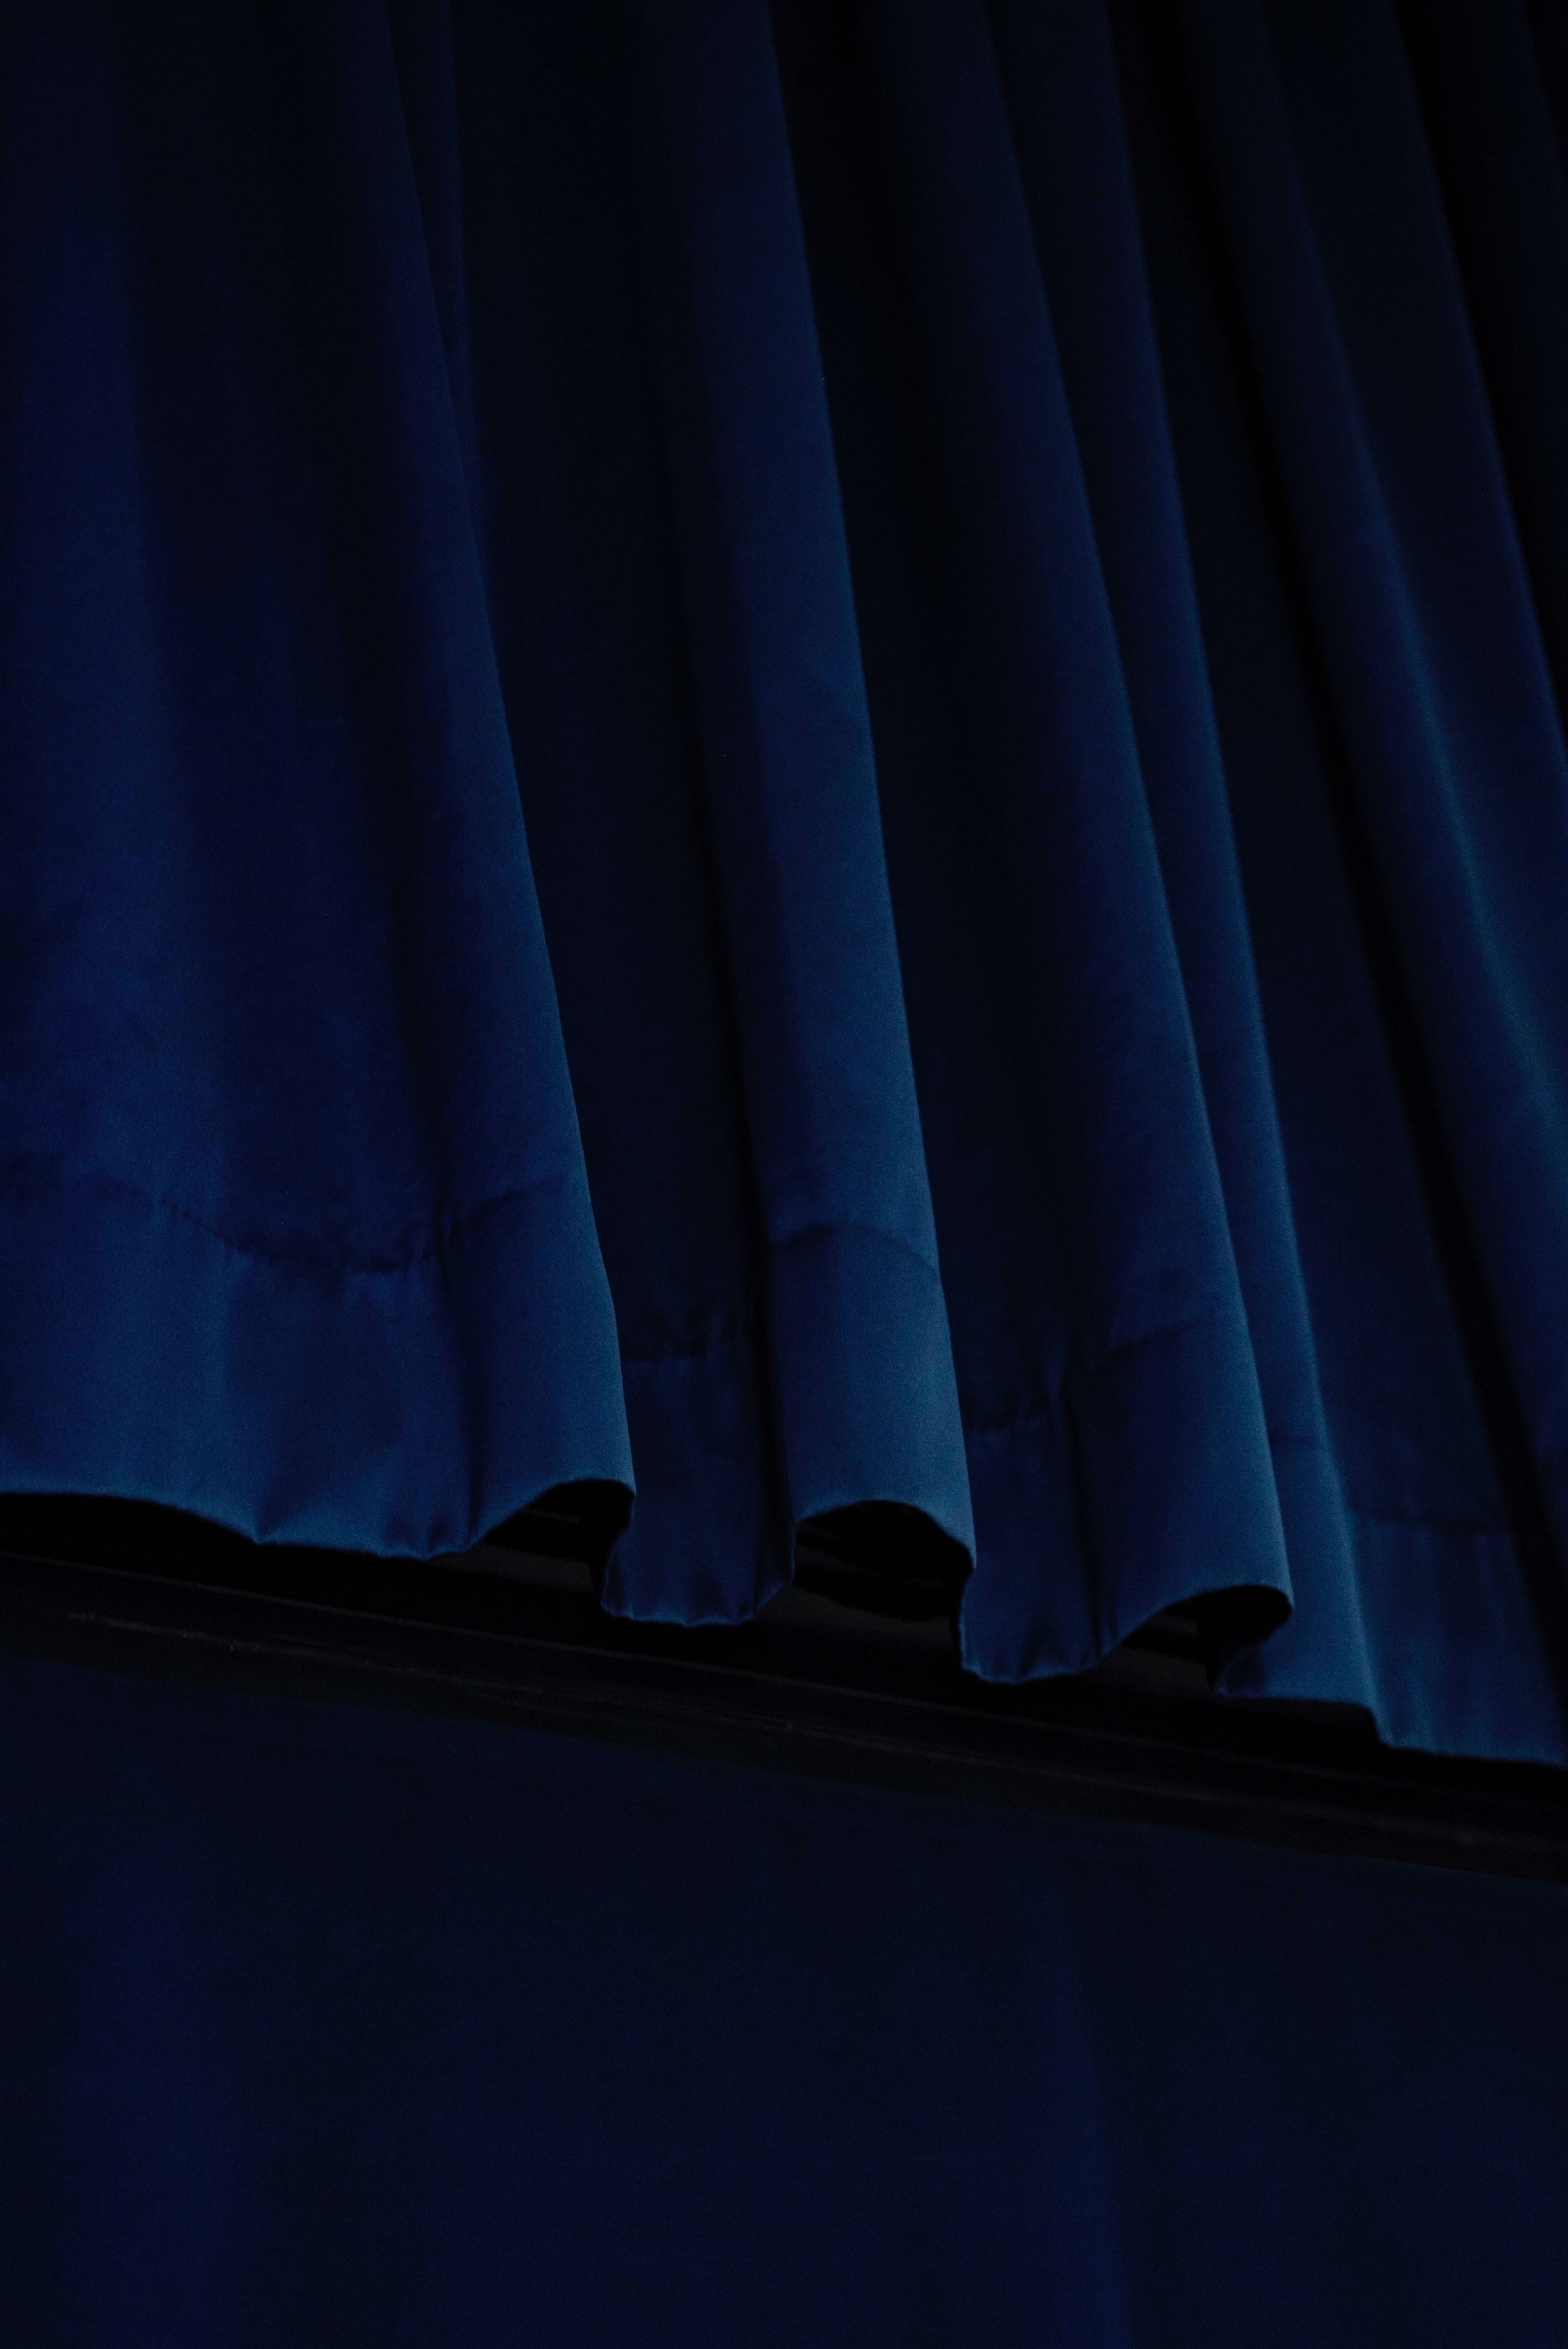 blue, dark, texture, textures, cloth, curtains